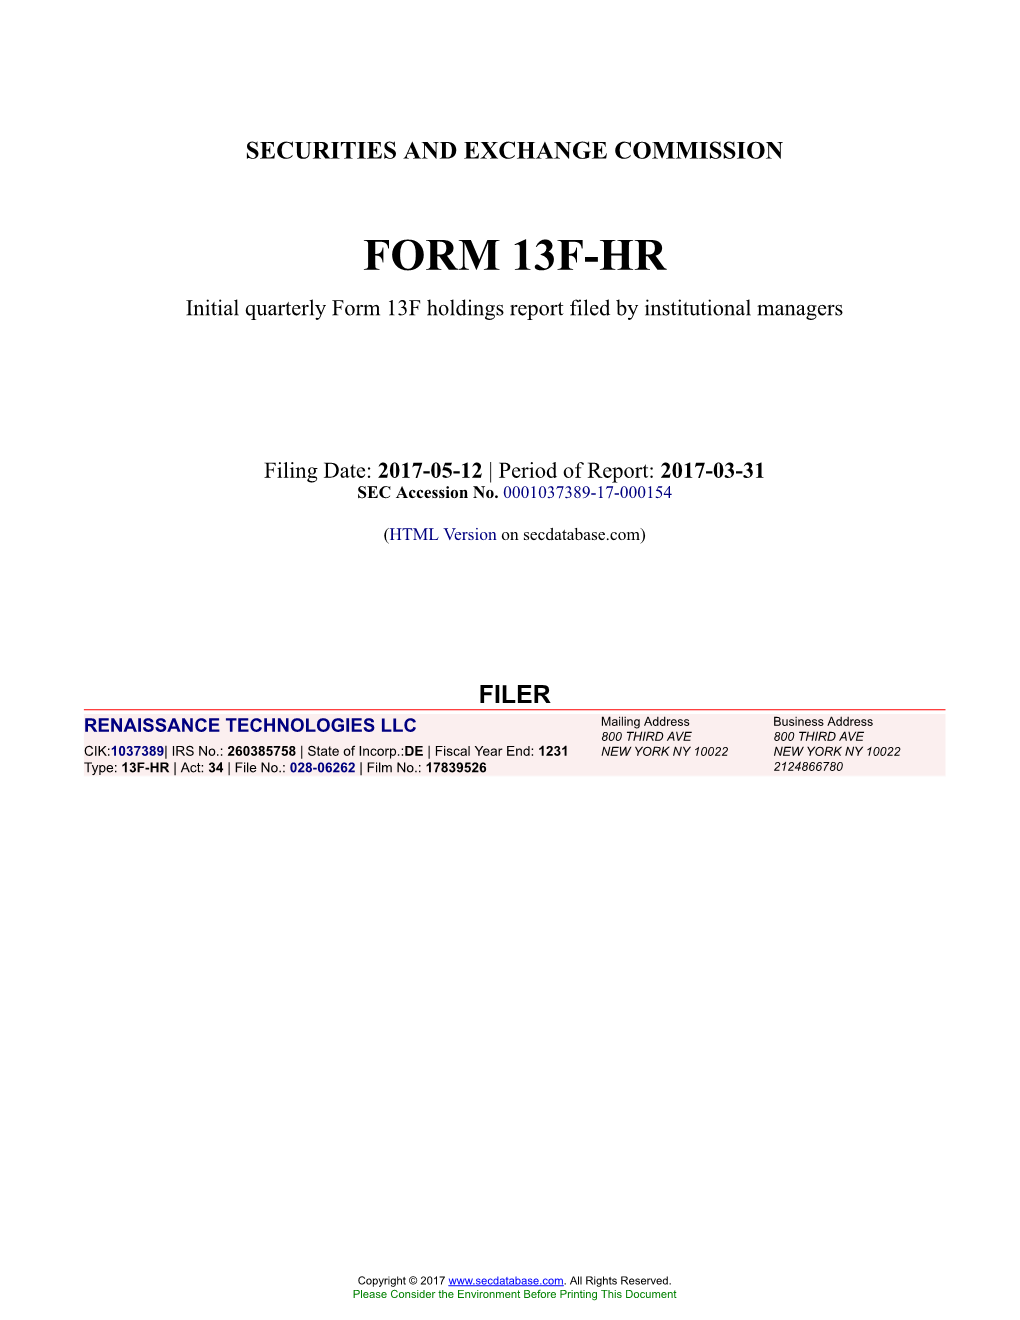 RENAISSANCE TECHNOLOGIES LLC Form 13F-HR Filed 2017-05-12